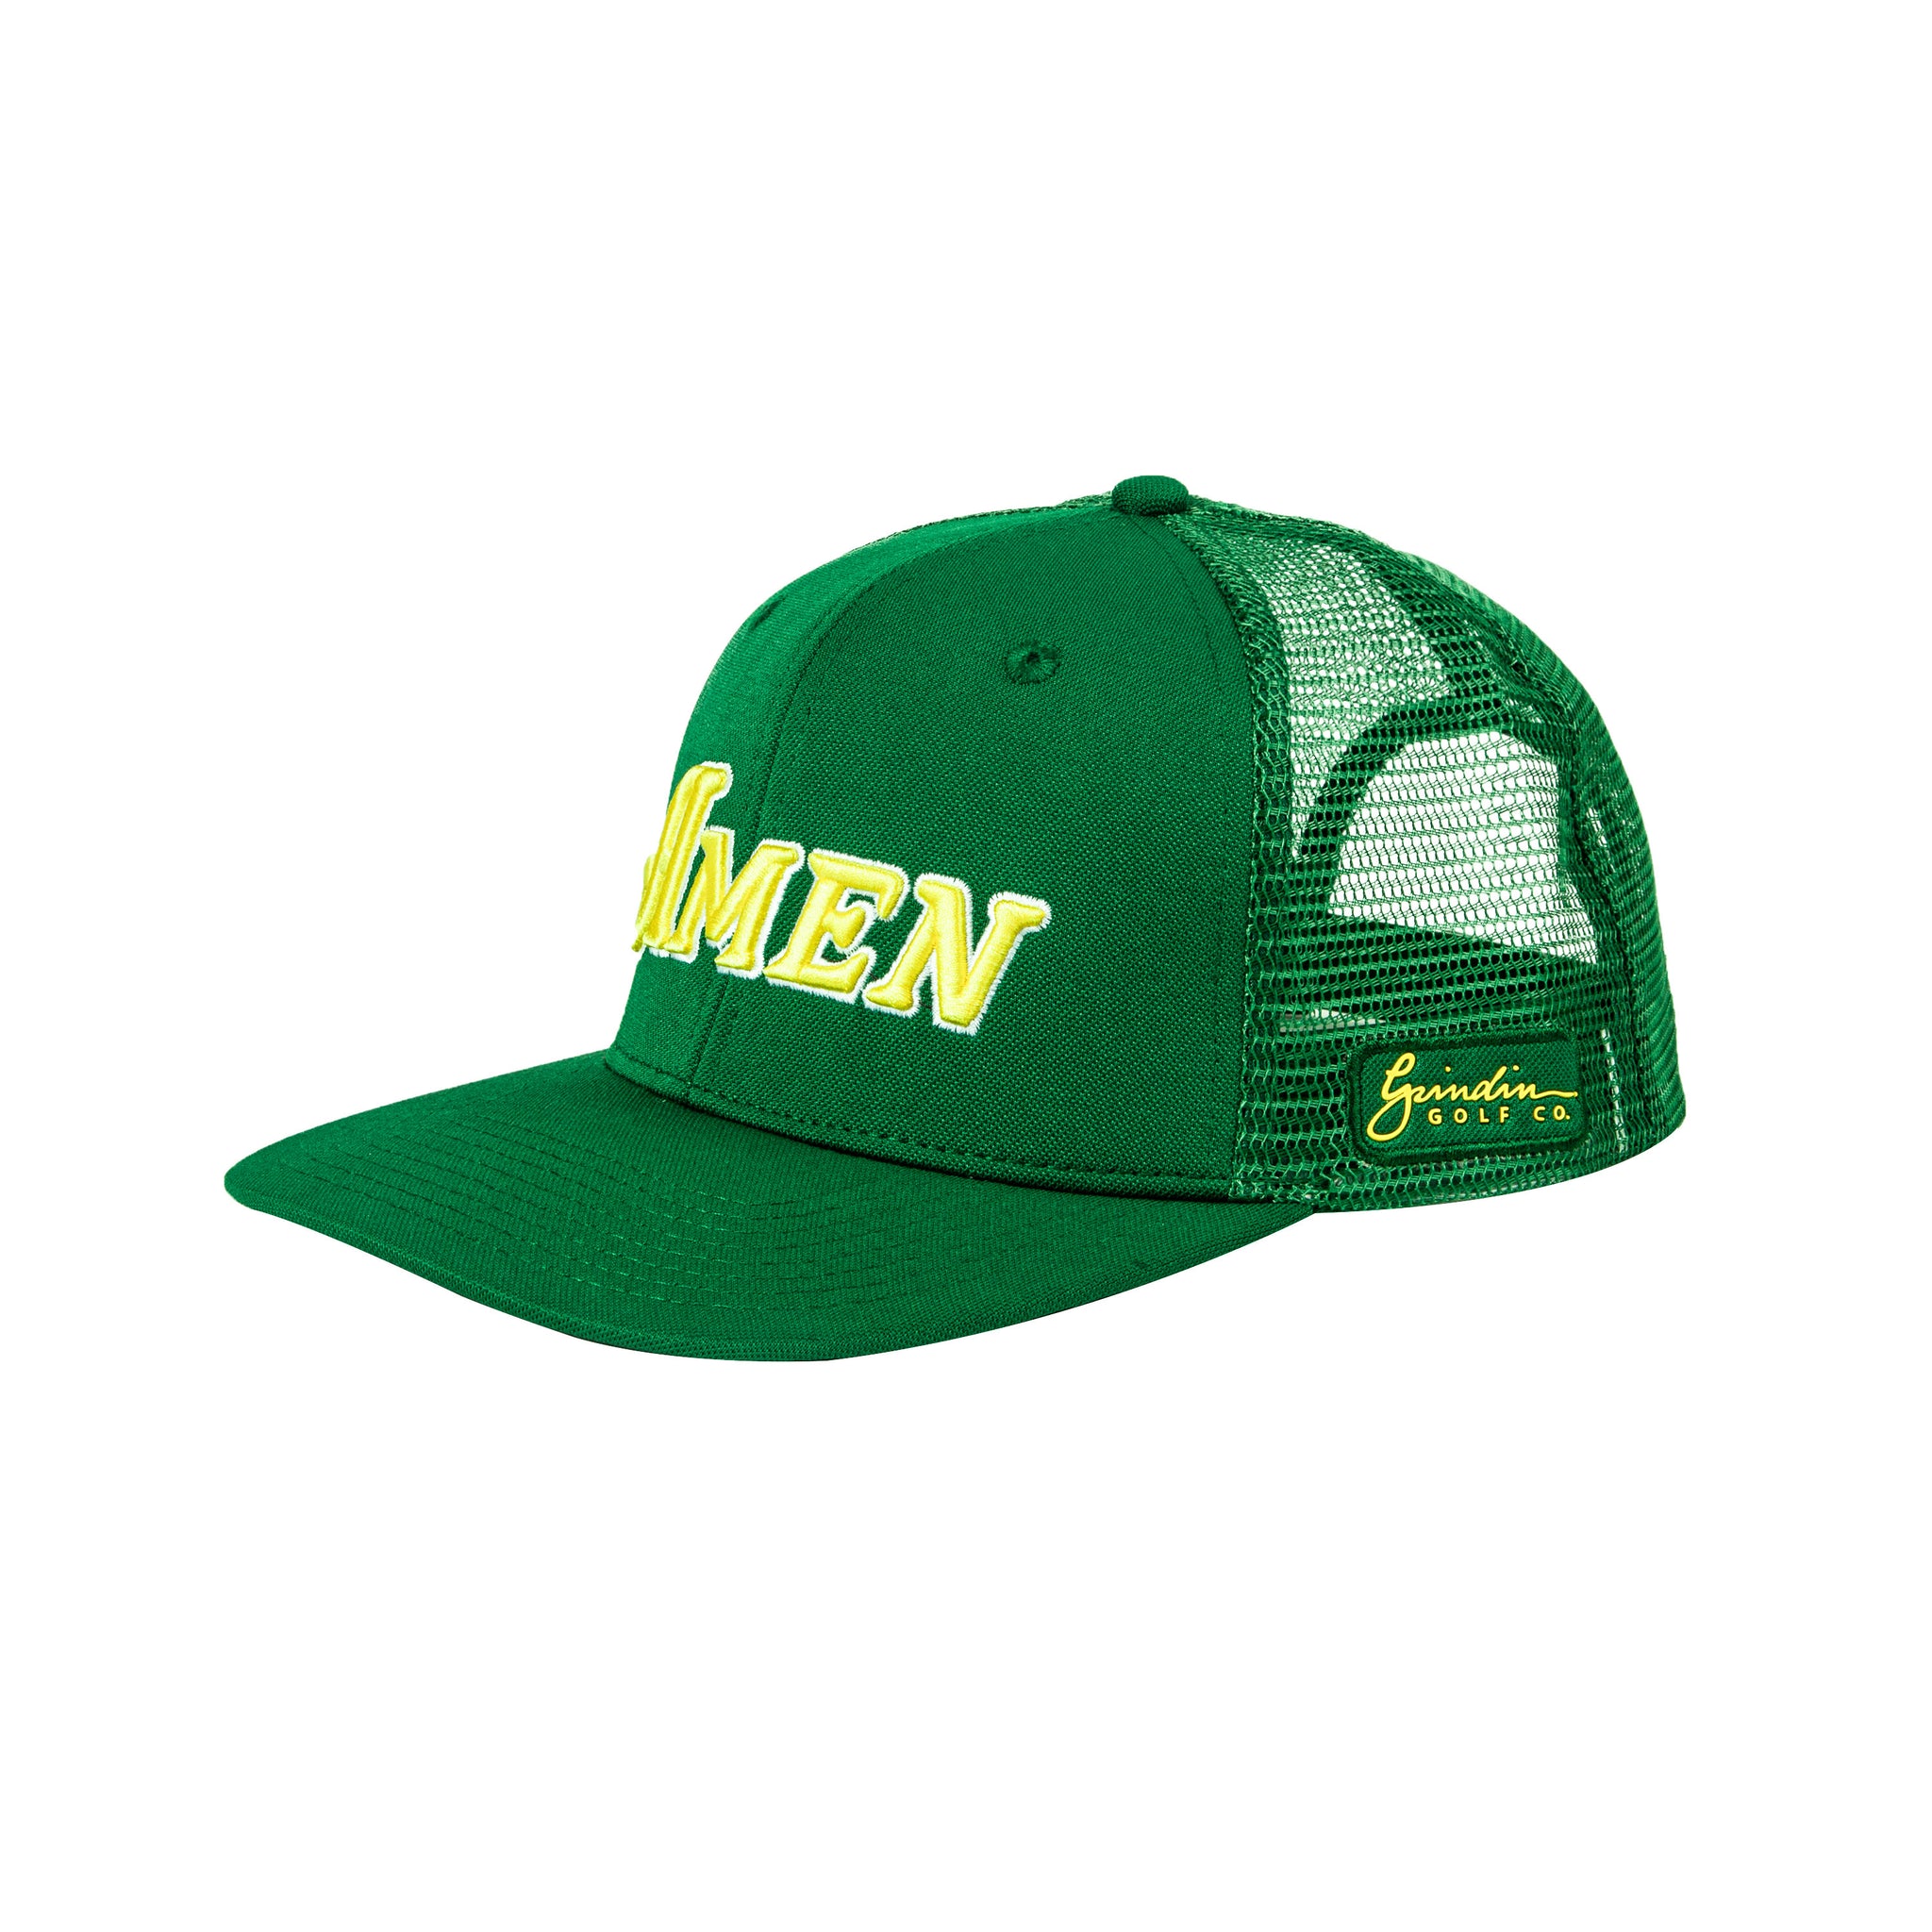 Green Curved Bill Amen Mesh Hat